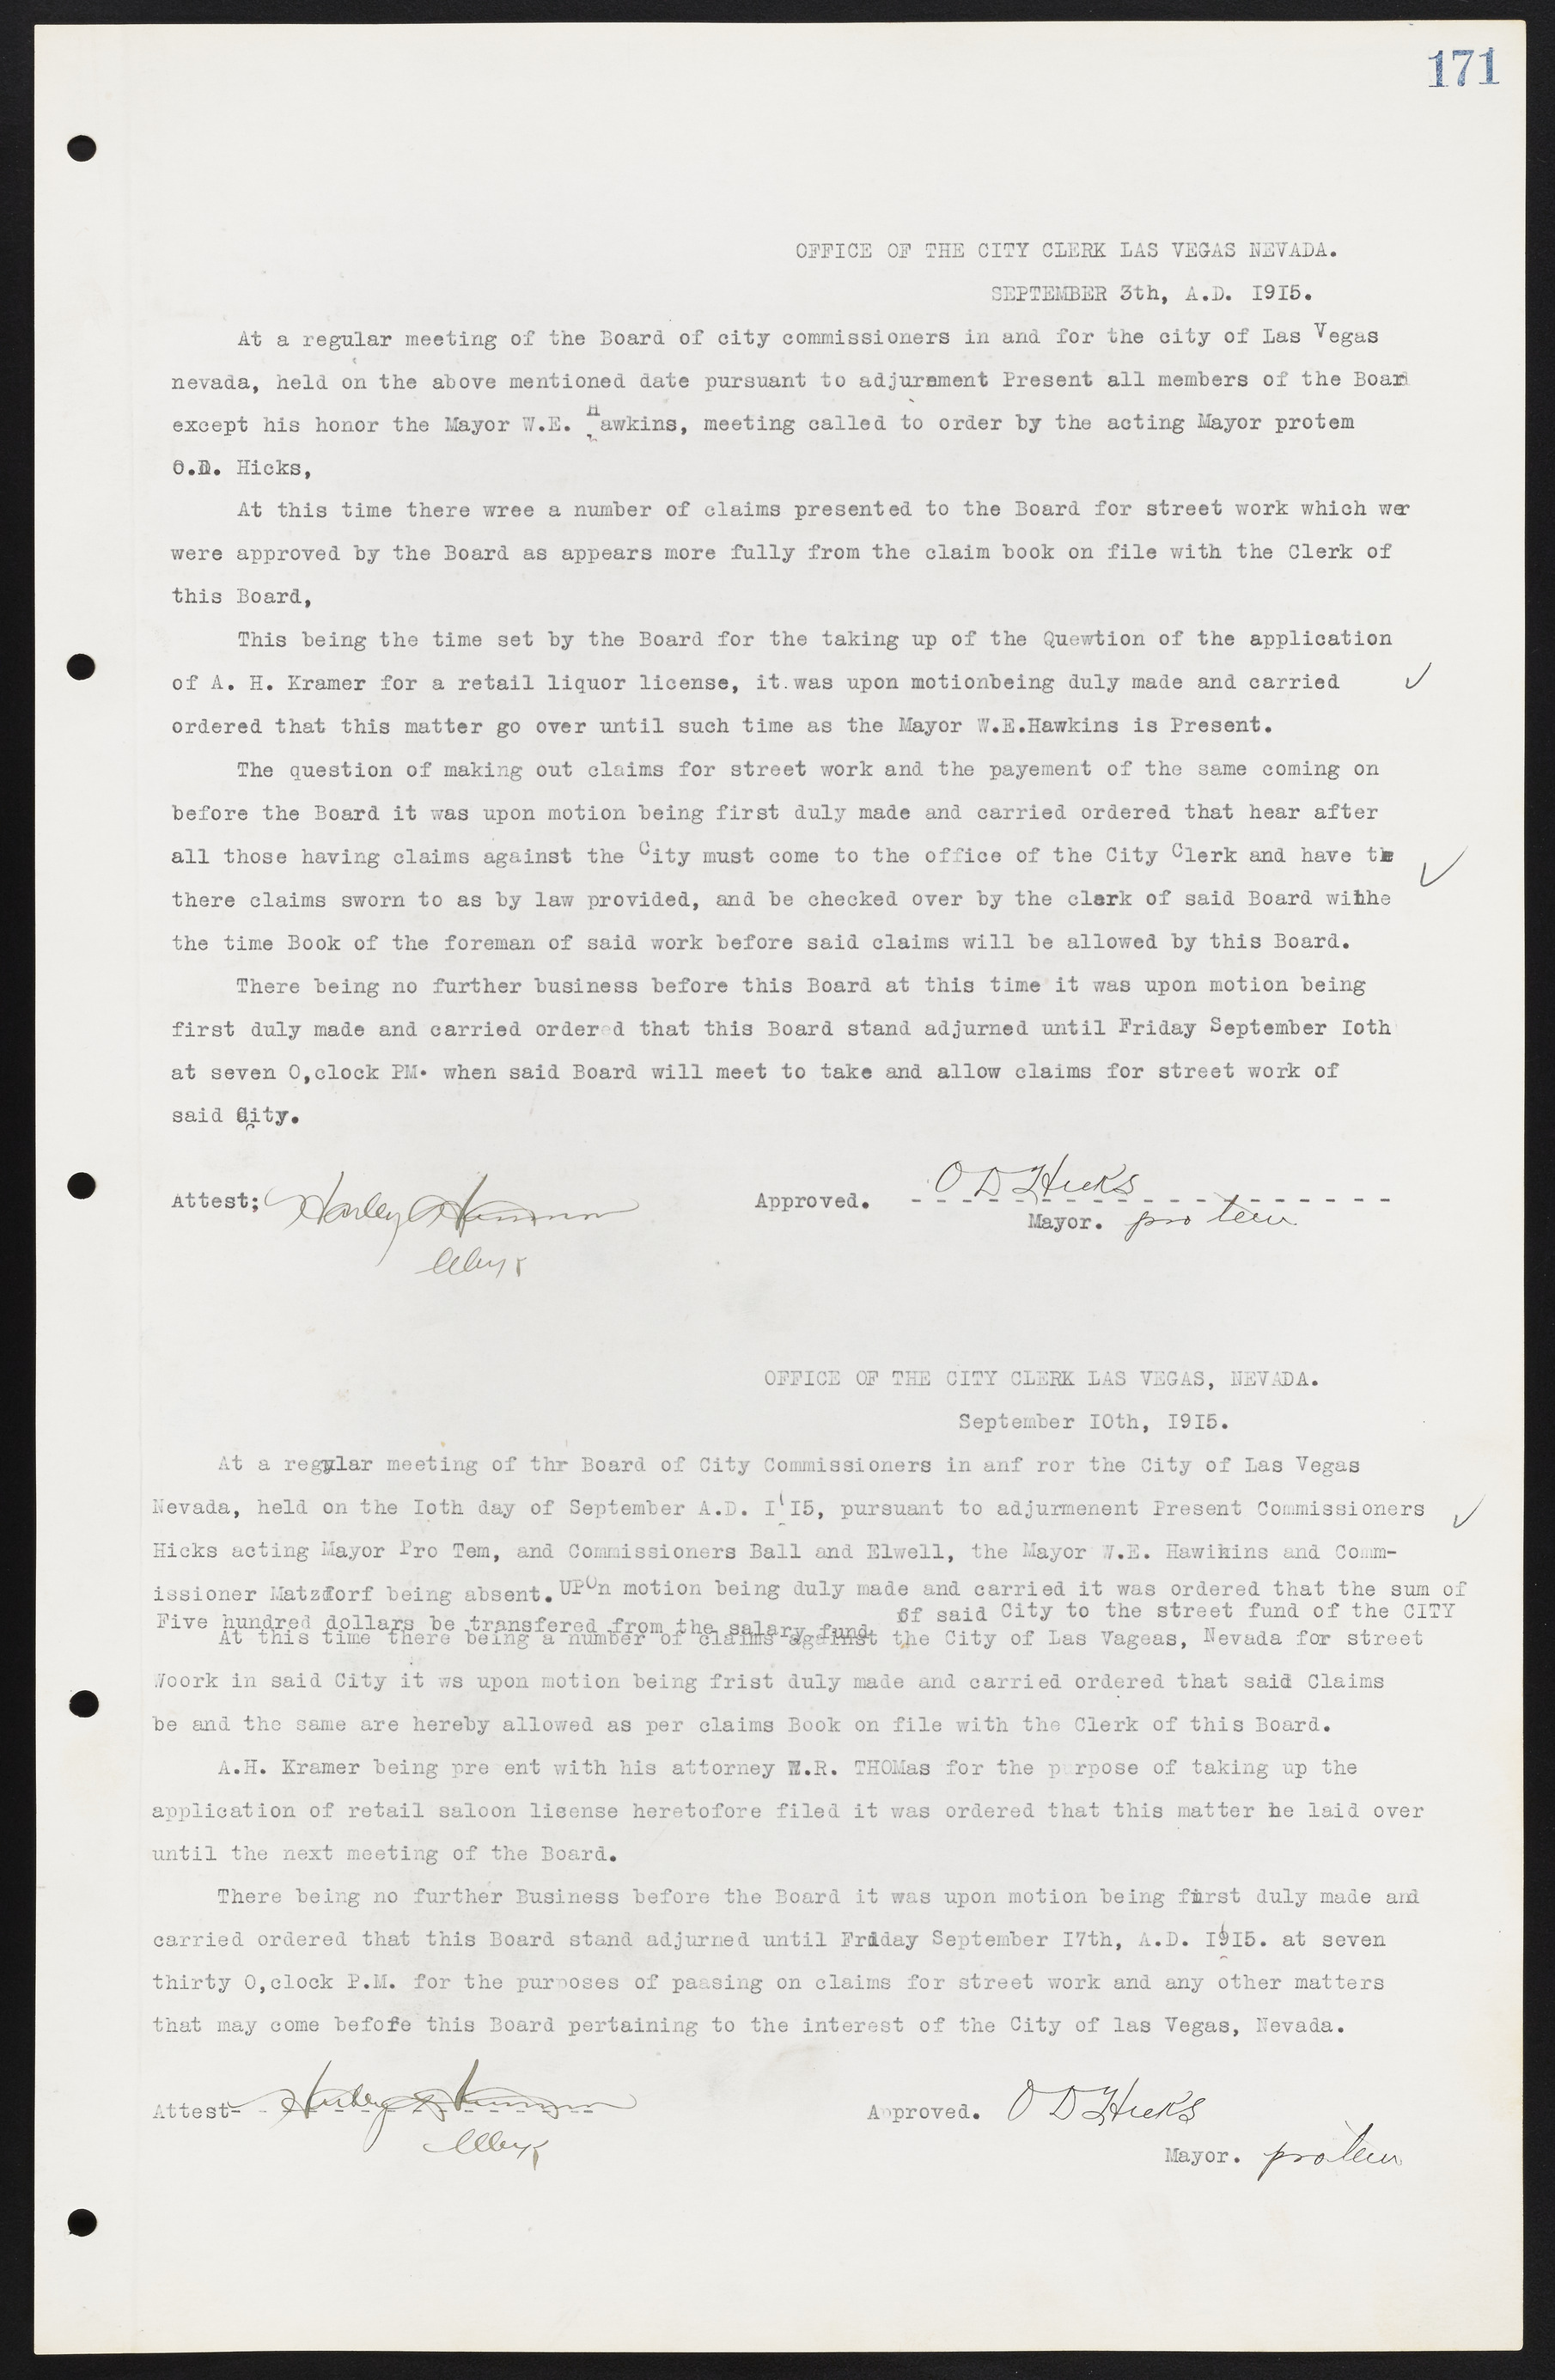 Las Vegas City Commission Minutes, June 22, 1911 to February 7, 1922, lvc000001-187